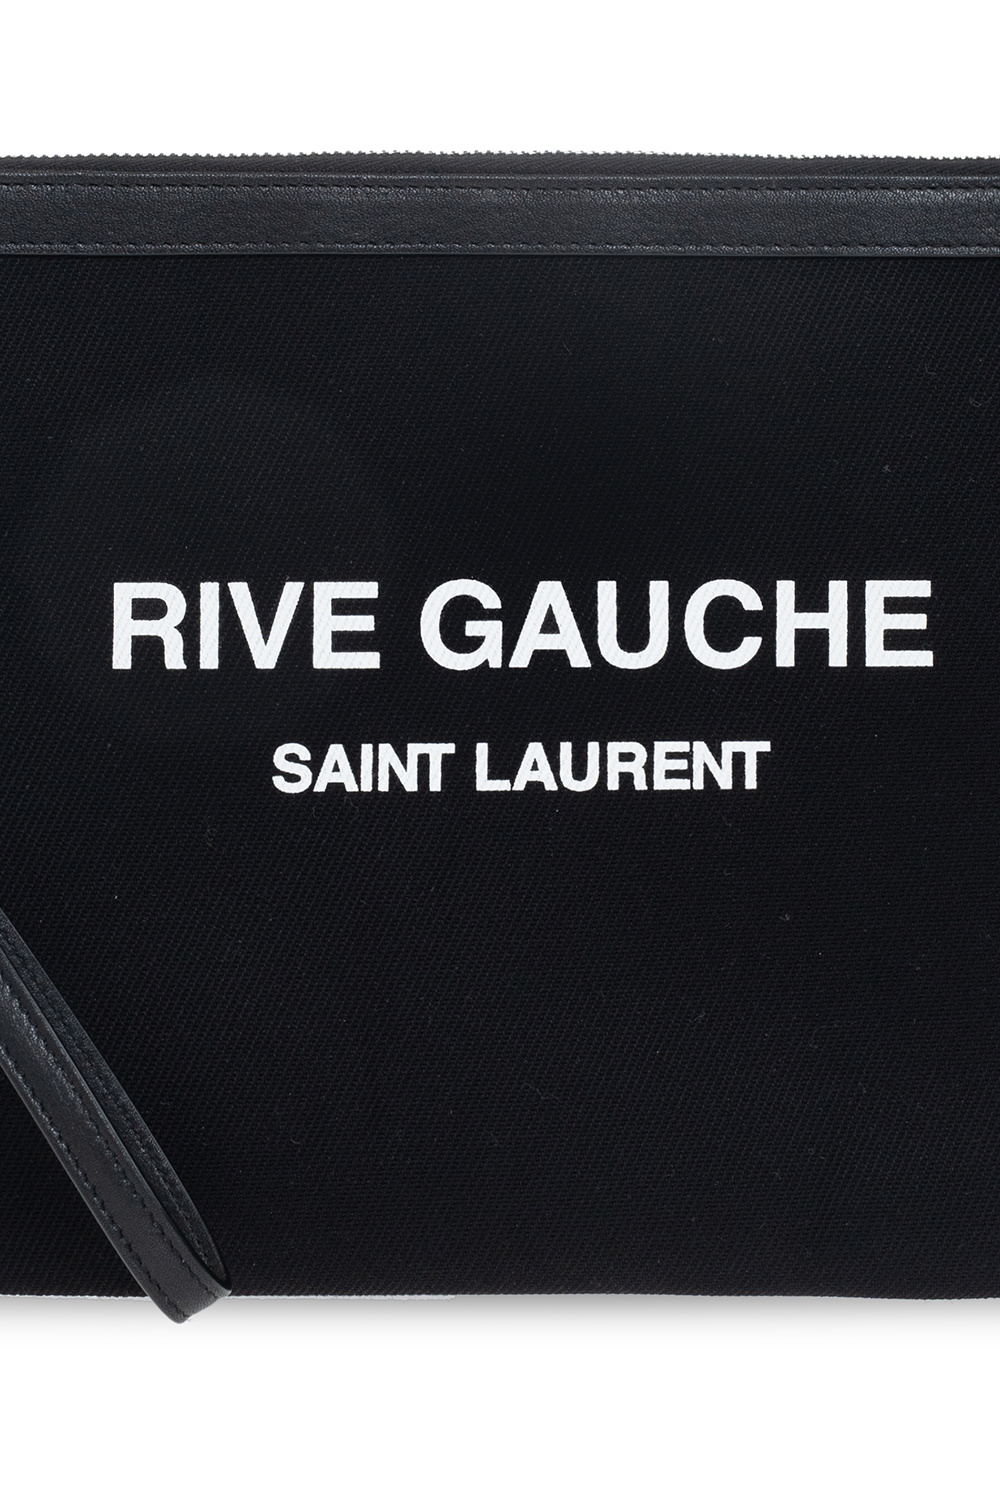 Saint Laurent Hand bag with logo